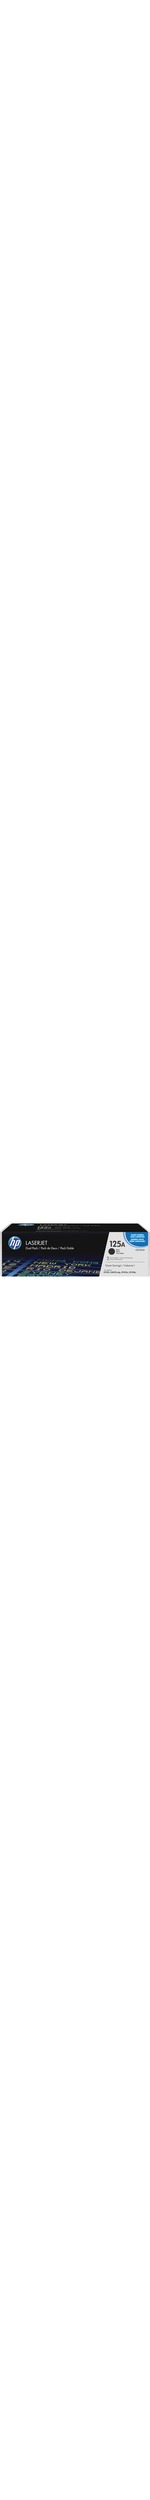 HP 125A Toner Cartridge - Black - Laser - 2200 Page - 2 Pack